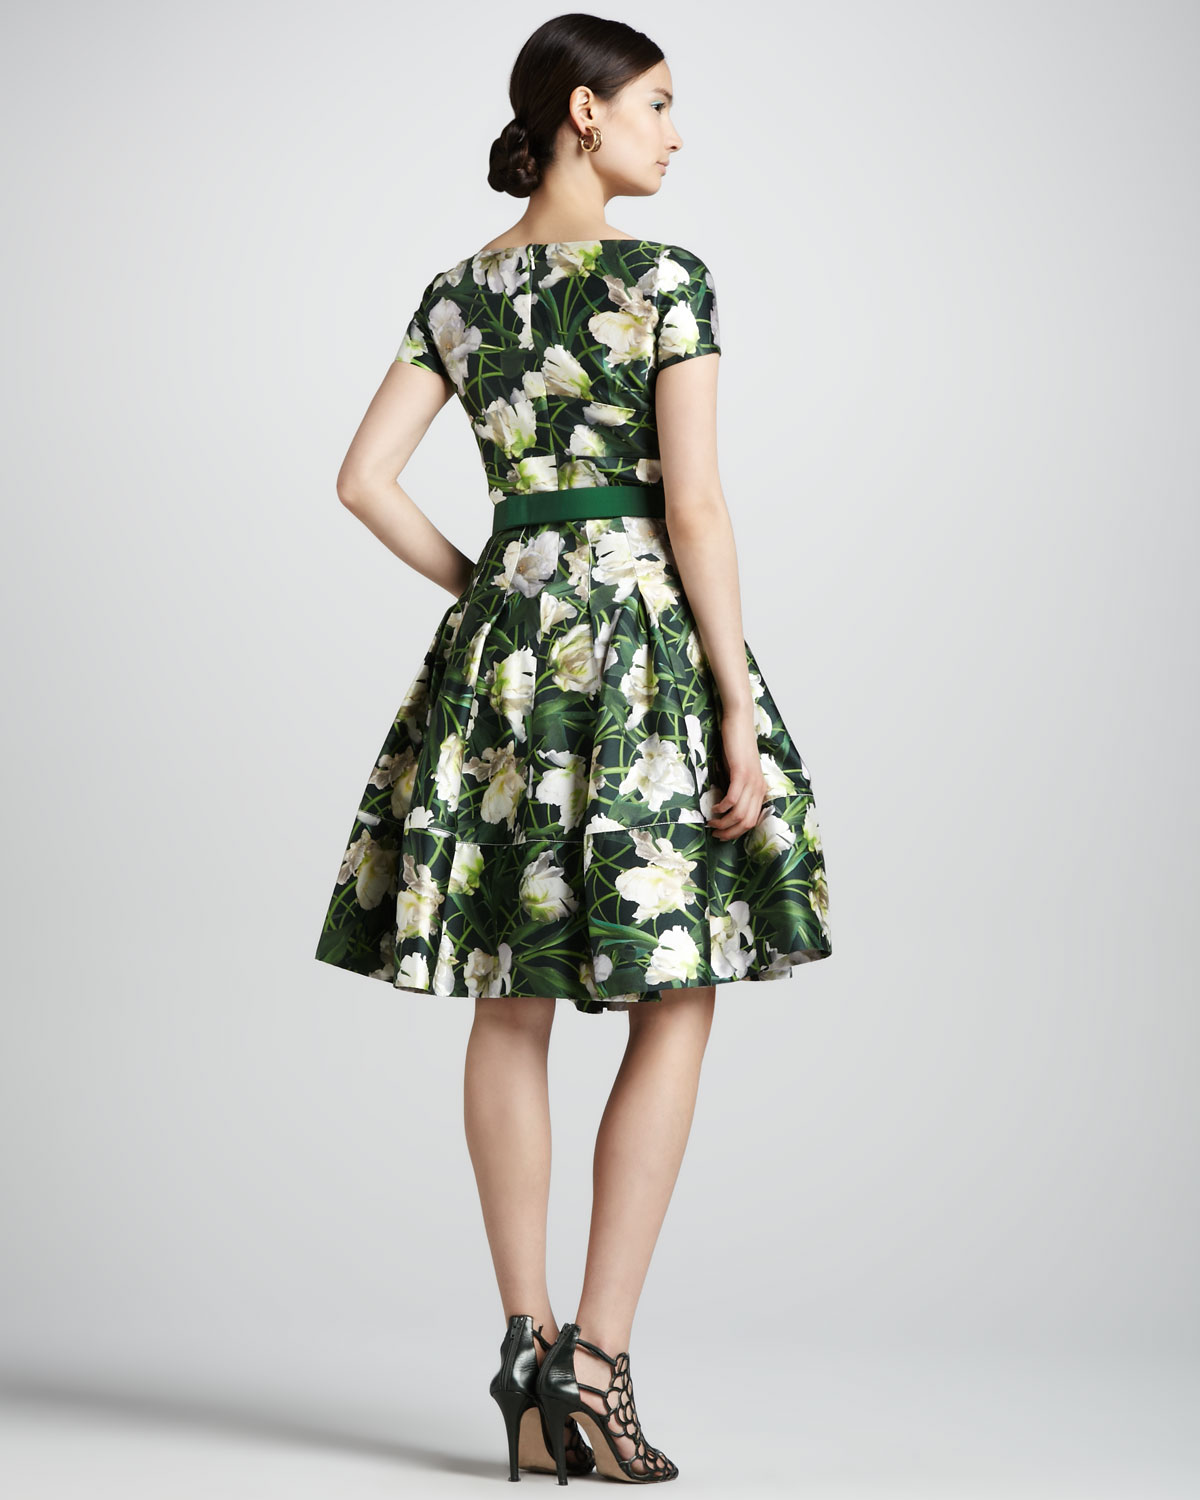 Lyst - Oscar De La Renta Floral Print Scoopneck Dress in Green